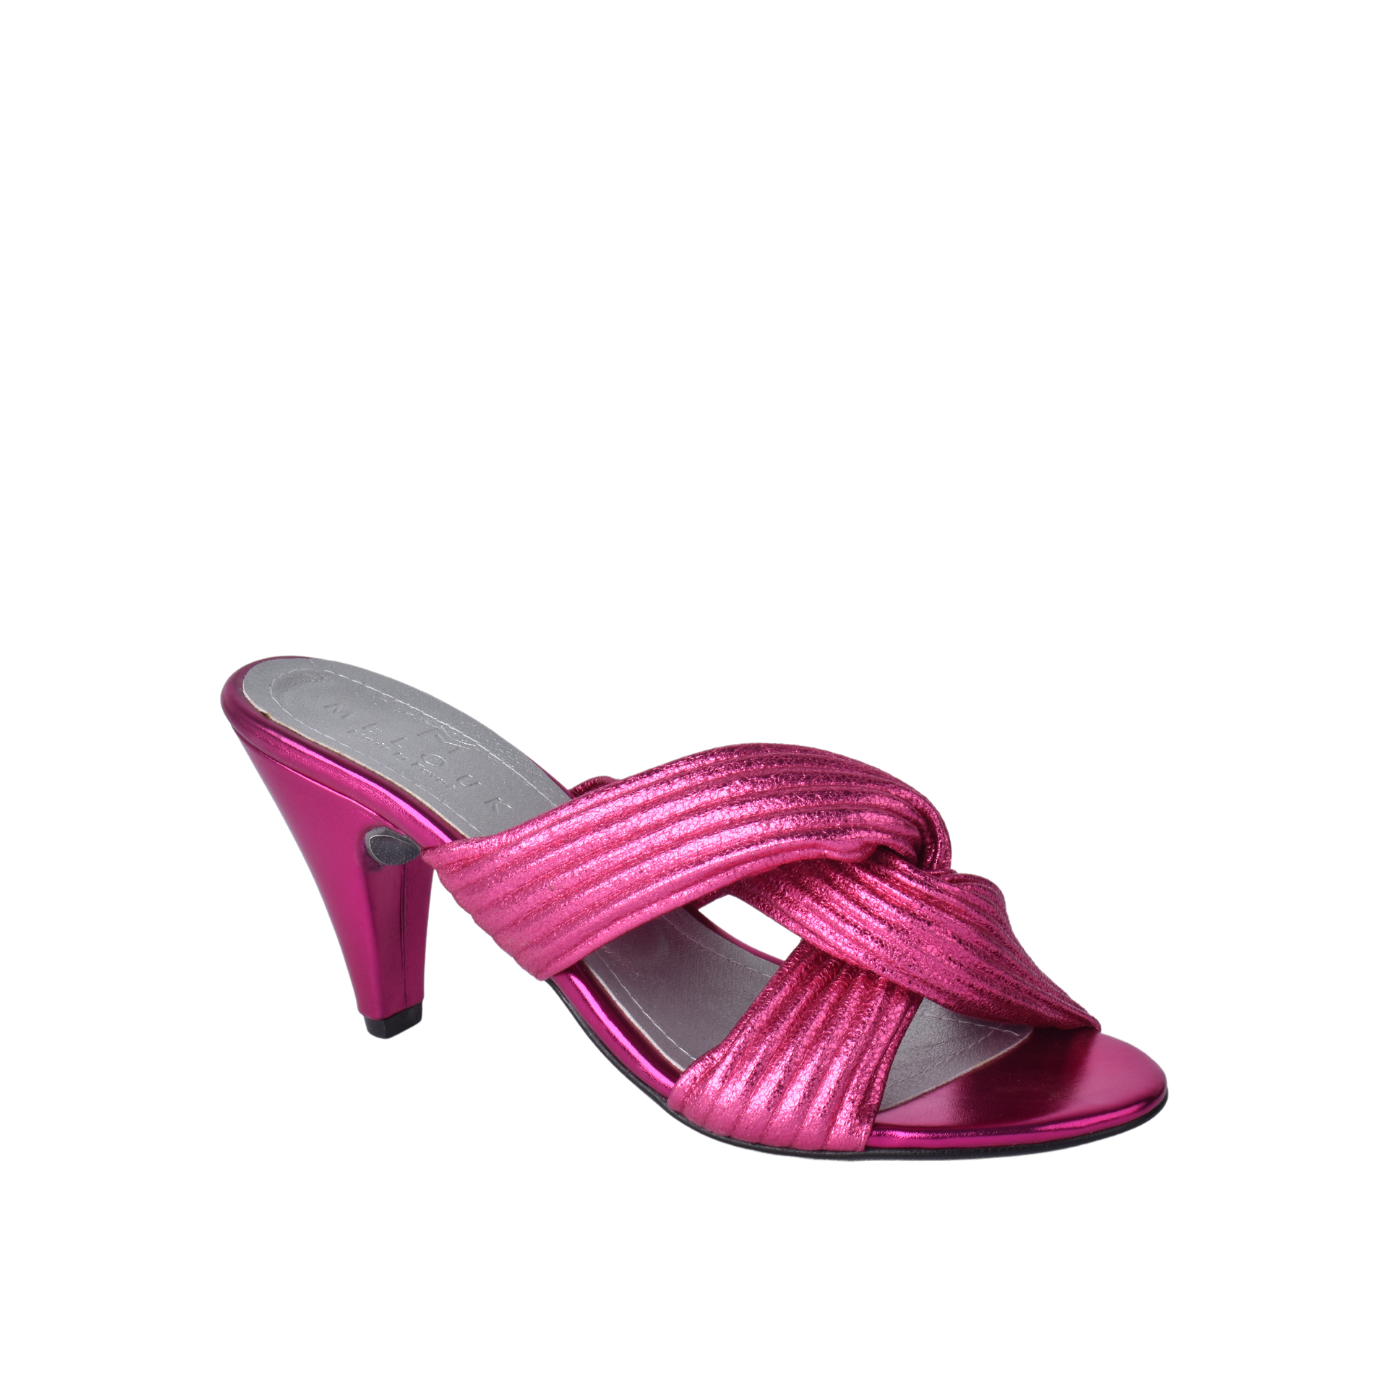 Classy heeled Flip flop